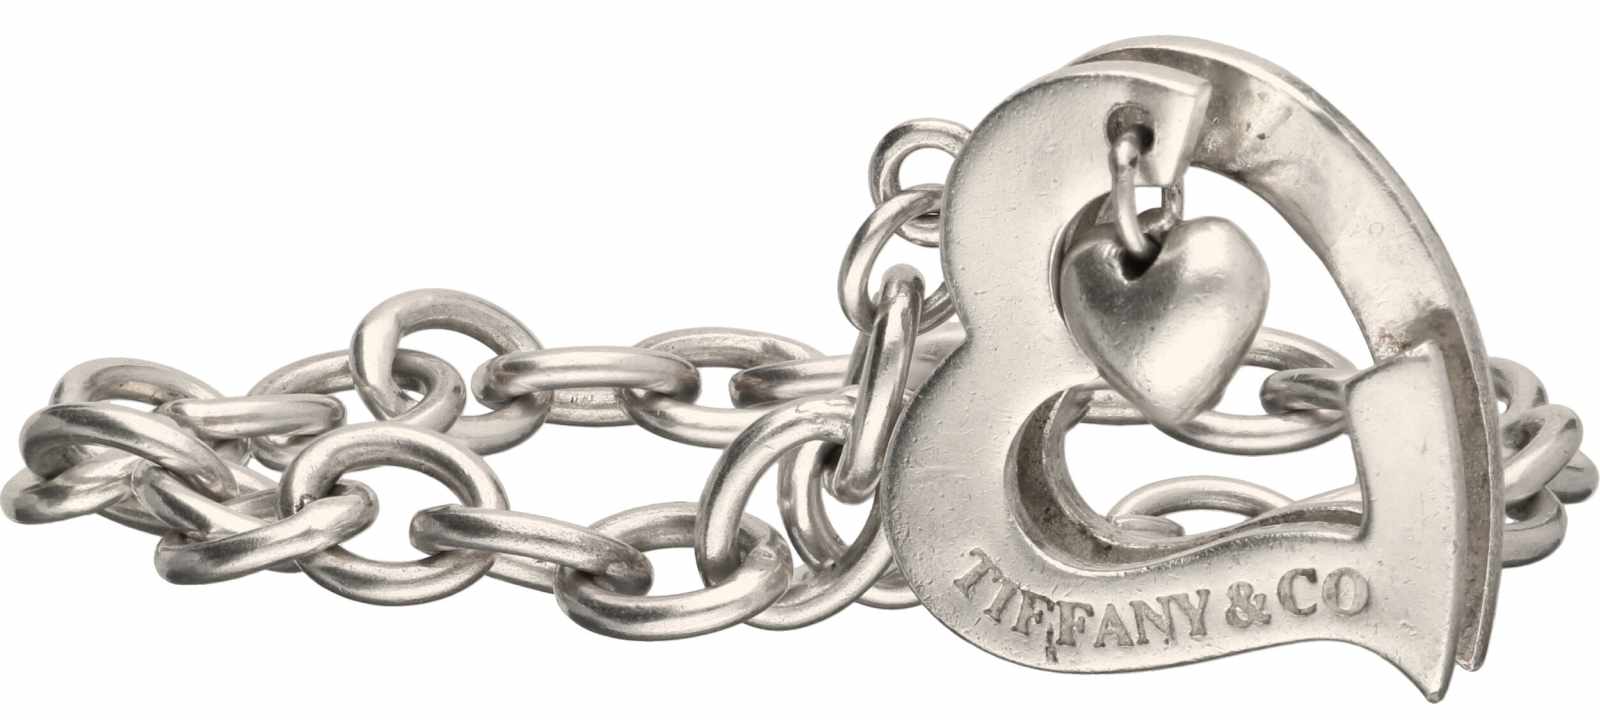 zurückgezogenTiffany & Co. bracelet silver - 925/1000. Set with necklace (4062). L: 20 cm. Weight: